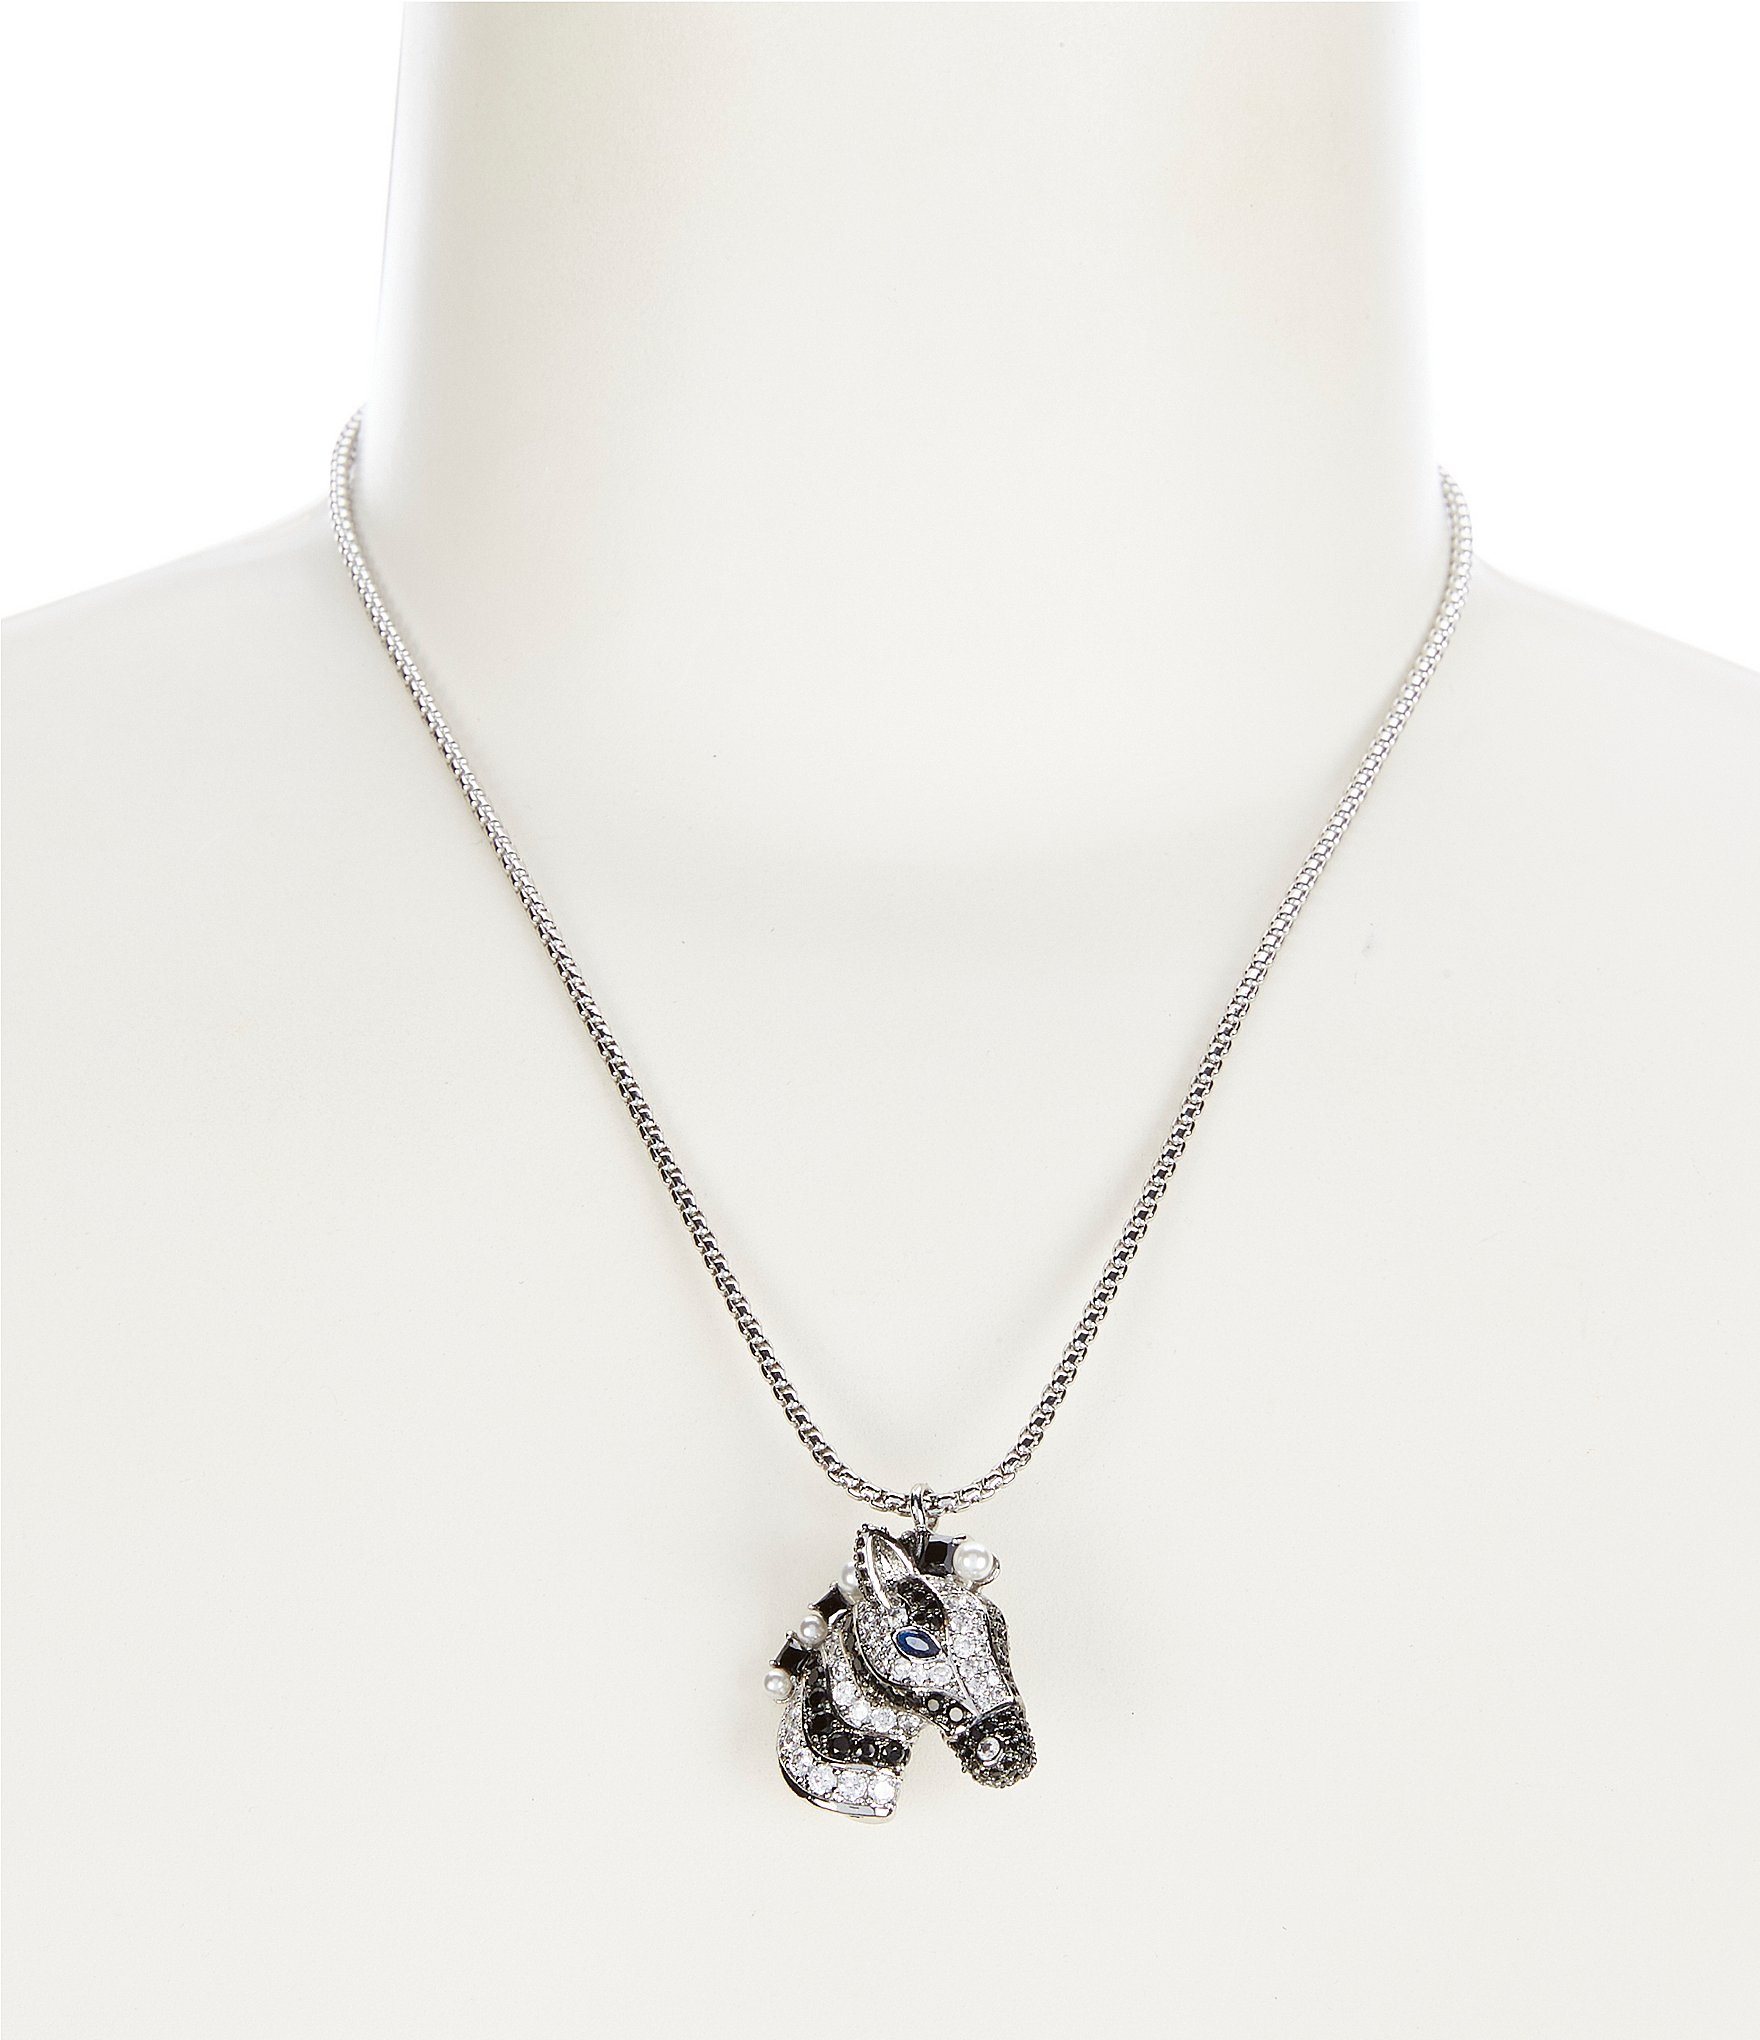 kate spade necklace: Women's Jewelry | Dillard's